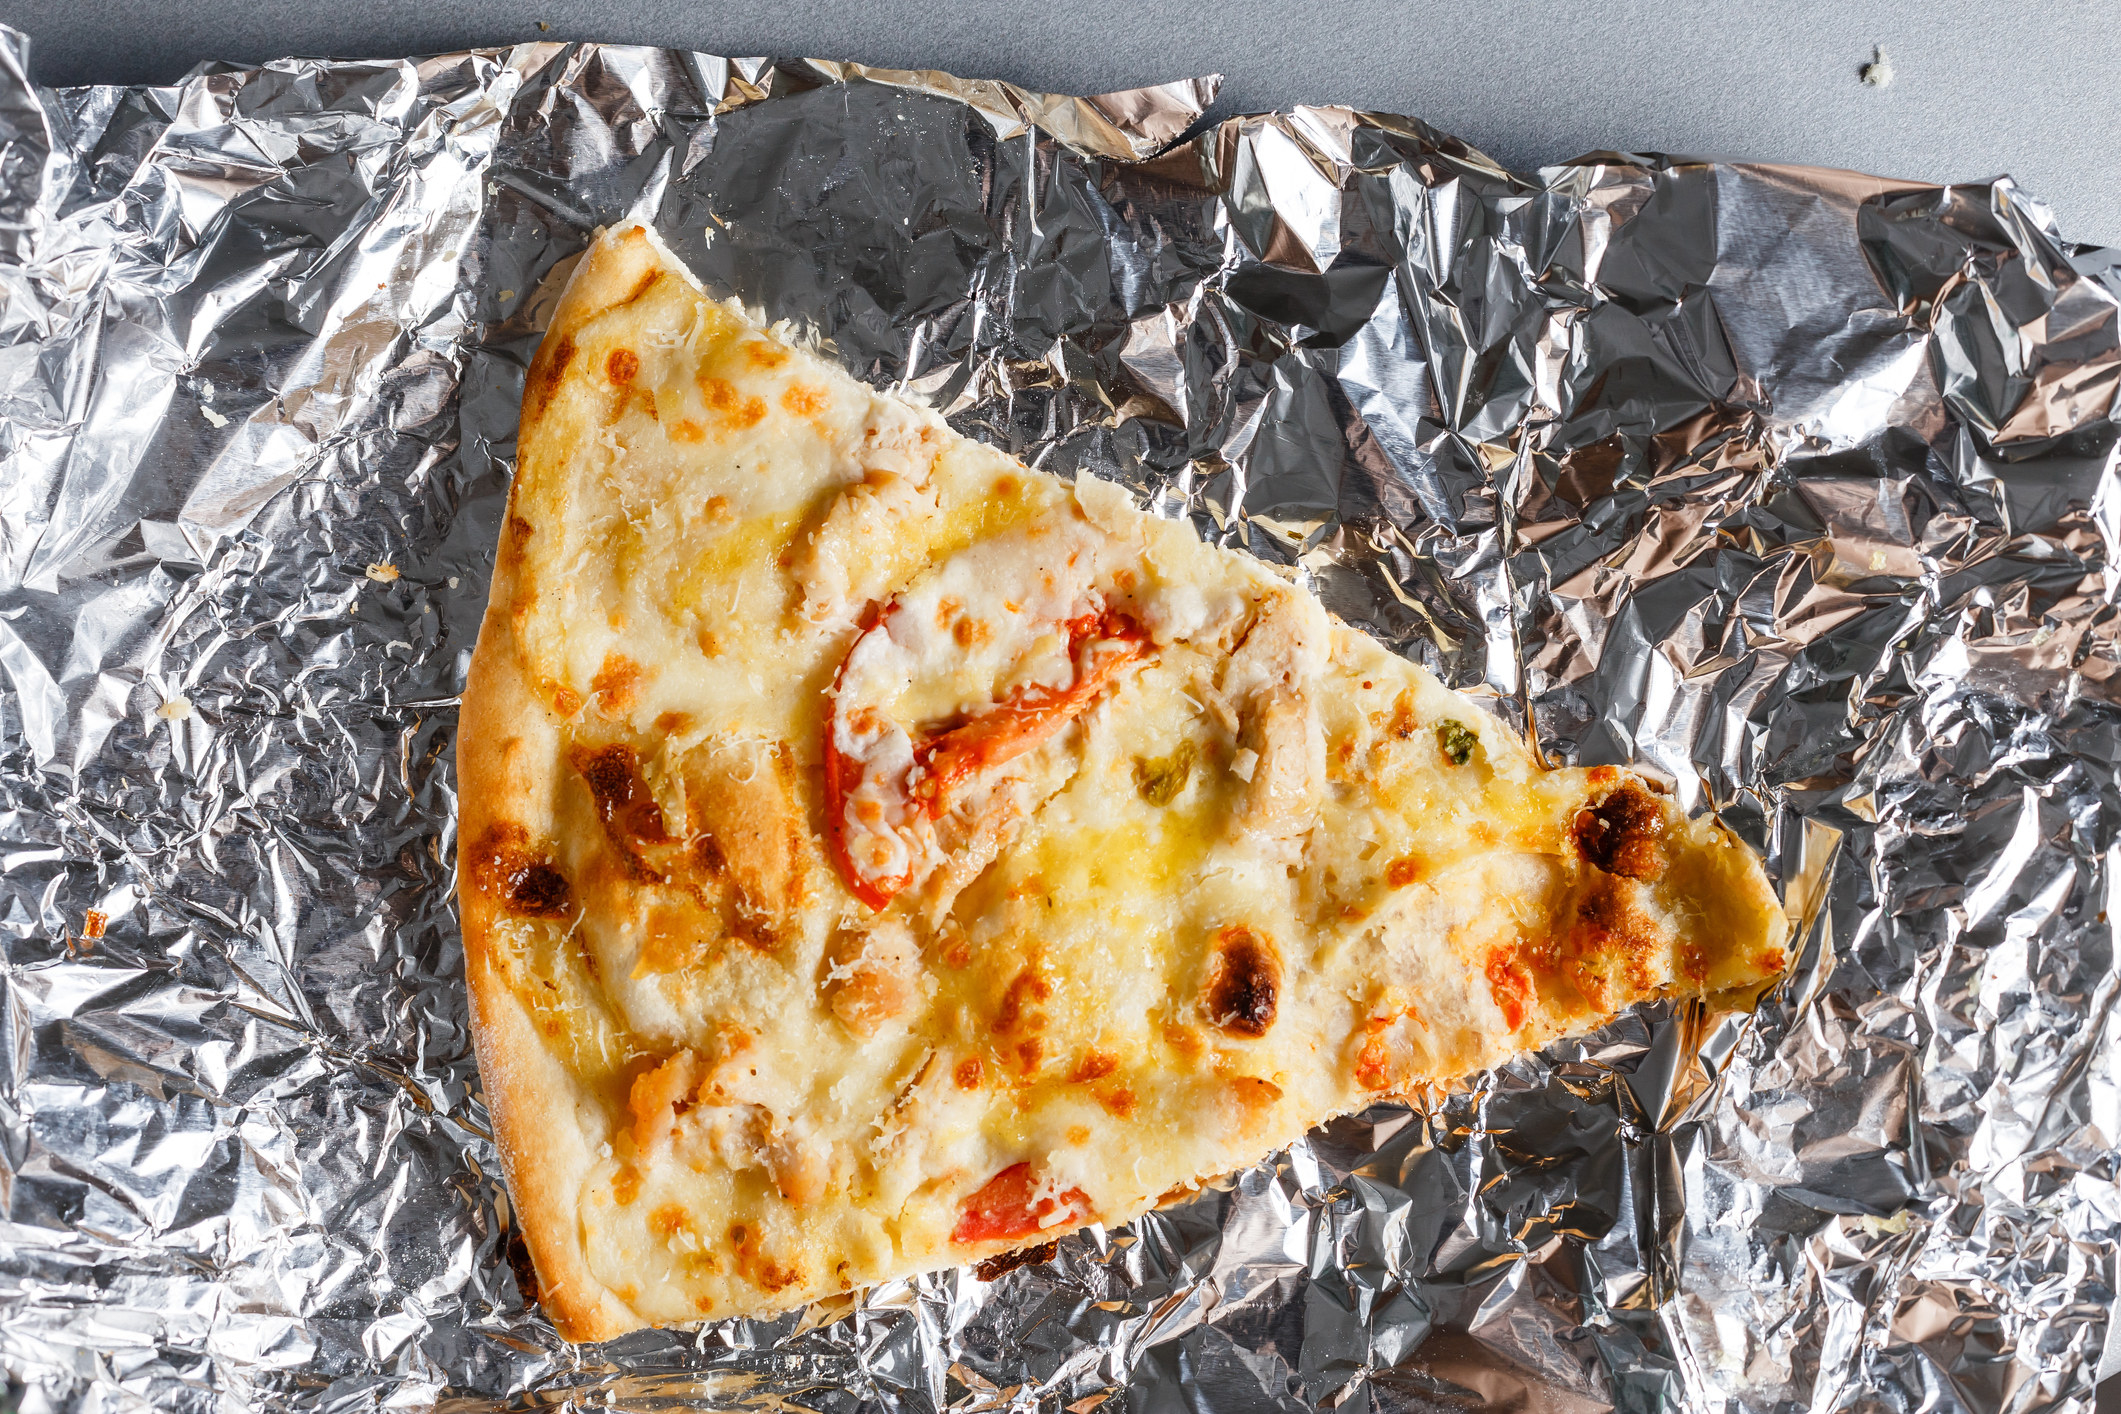 A slice of cold pizza on foil.